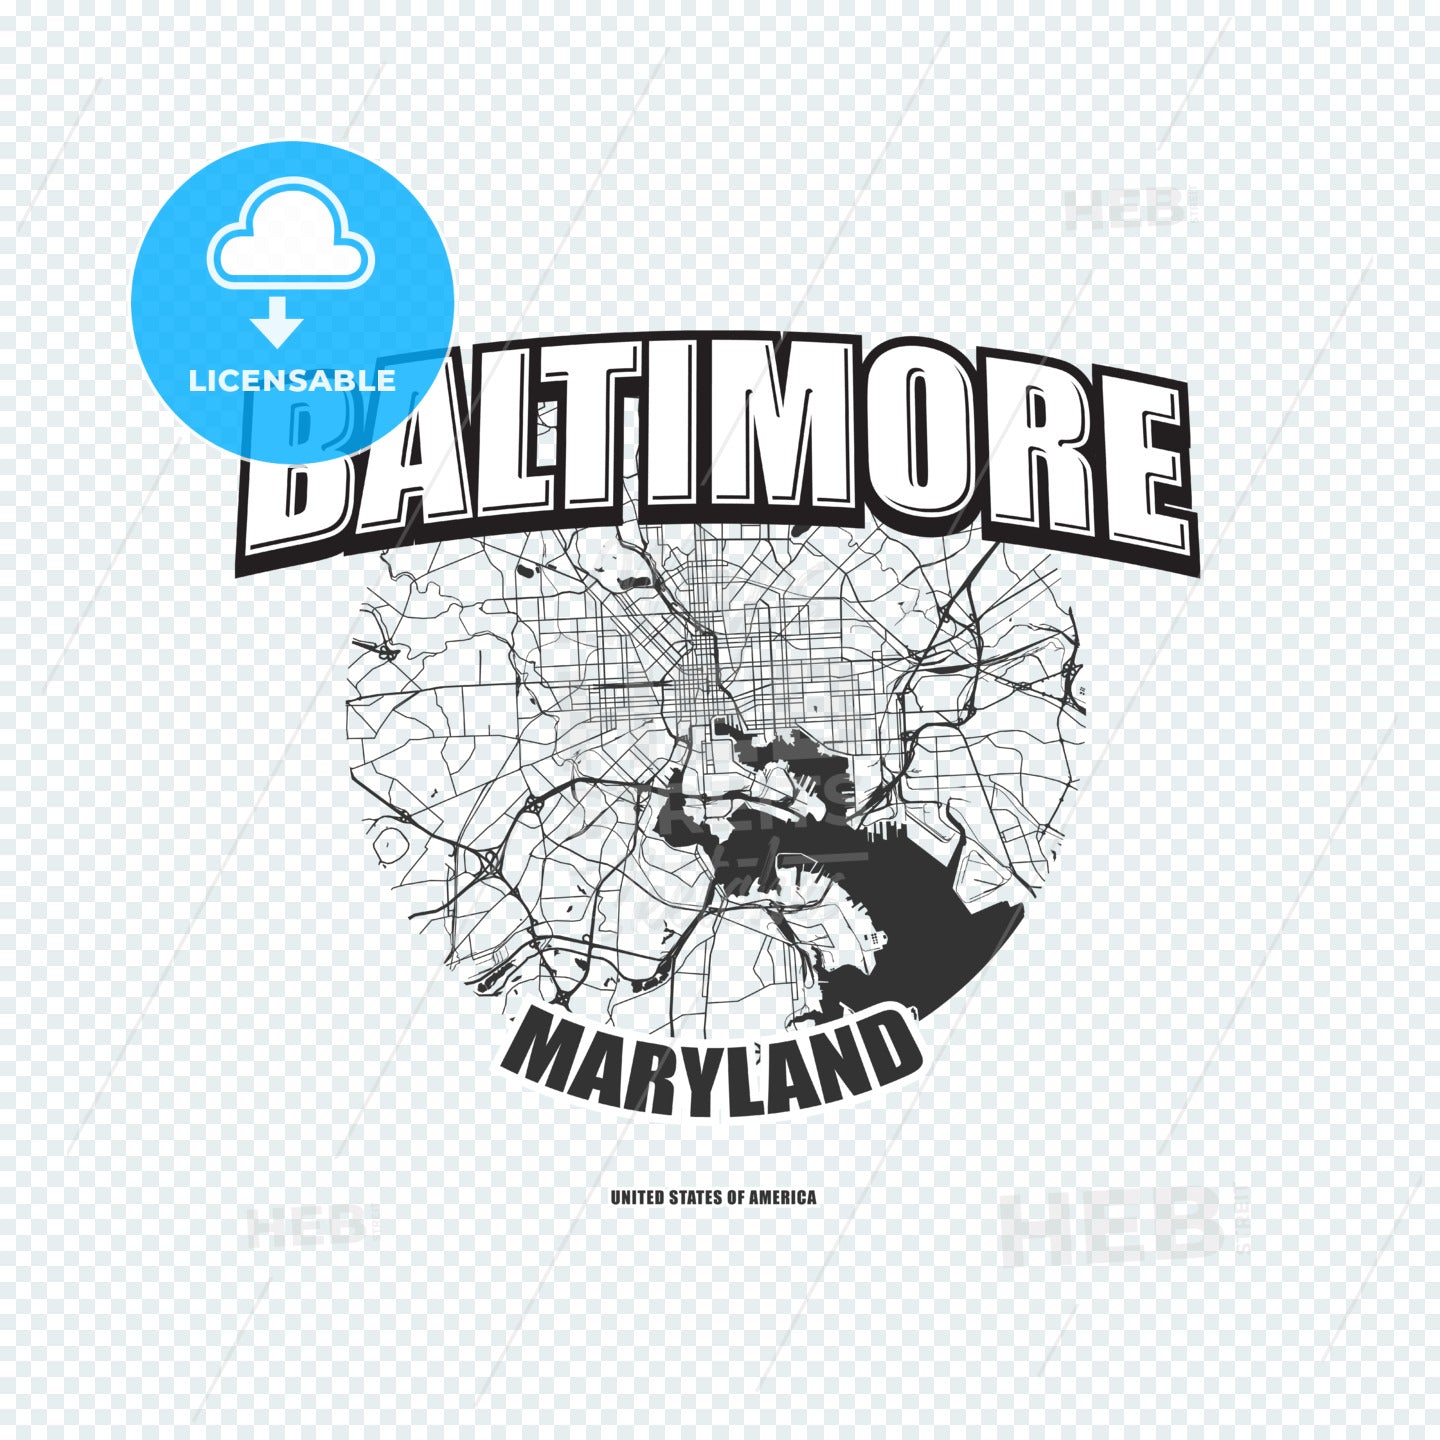 Baltimore, Maryland, logo artwork – instant download